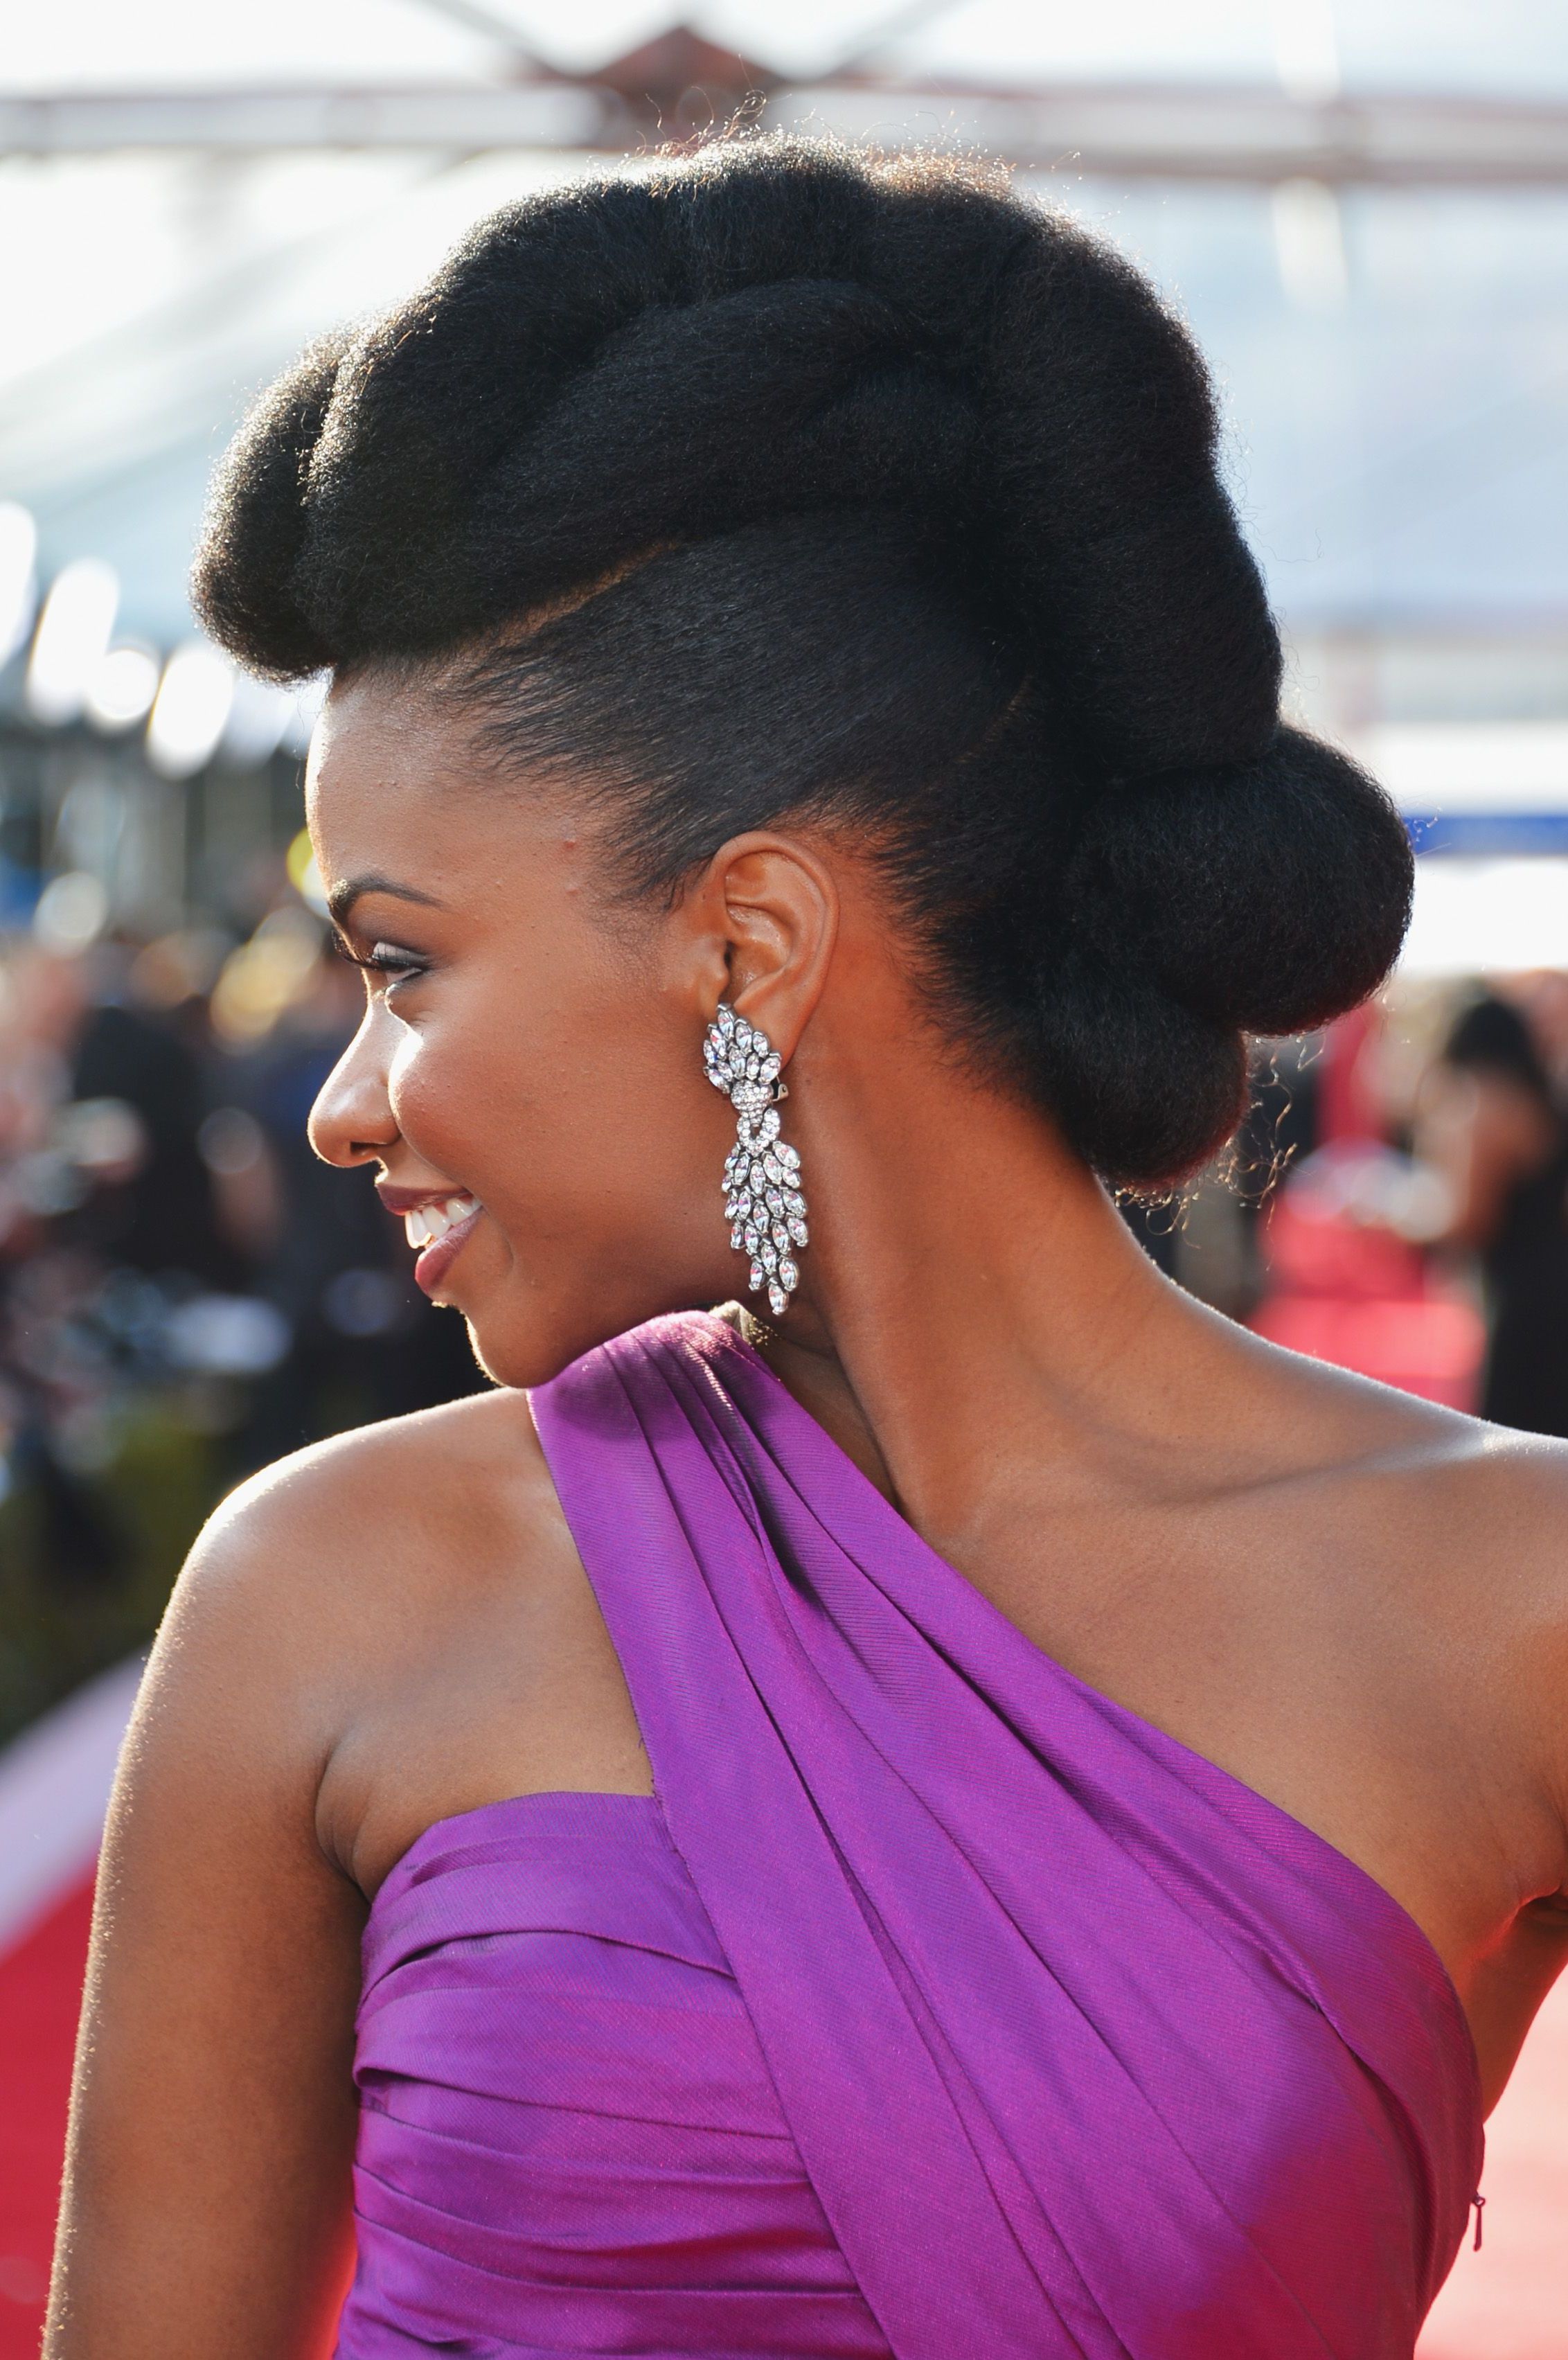 Preferred Medium Hairstyles Black Women With Regard To 30 Easy Natural Hairstyles For Black Women – Short, Medium & Long (View 20 of 20)